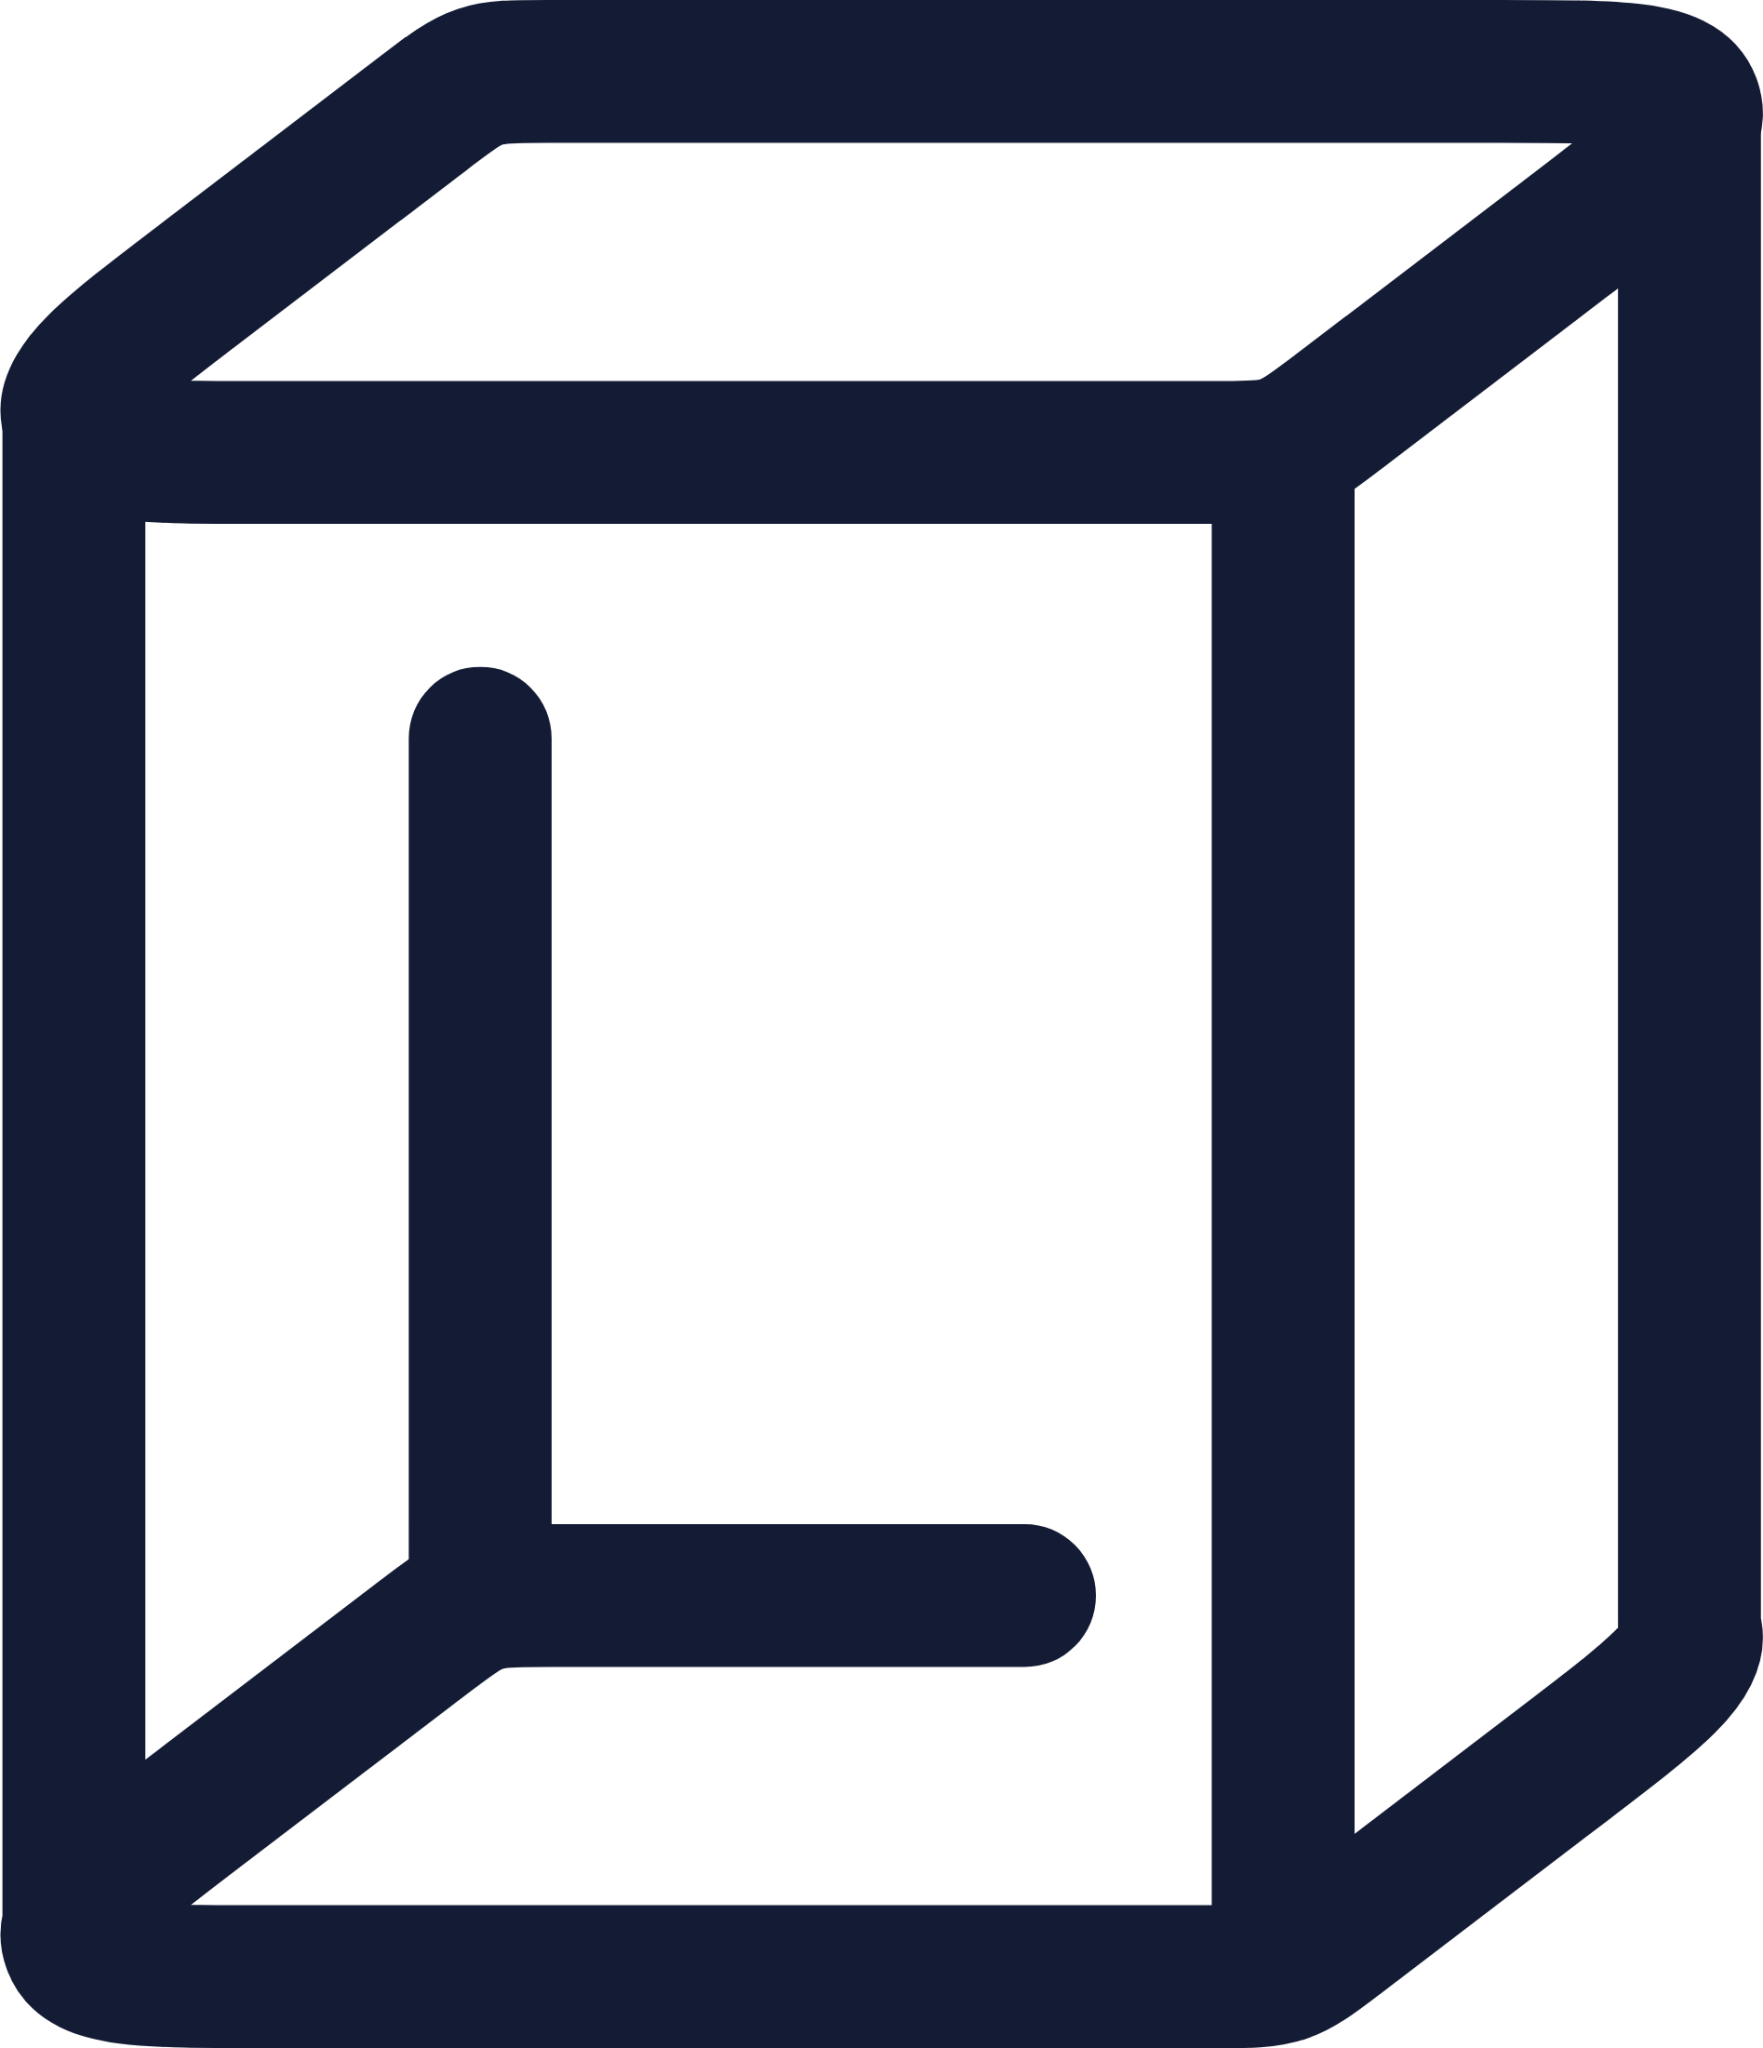 rectangular icon